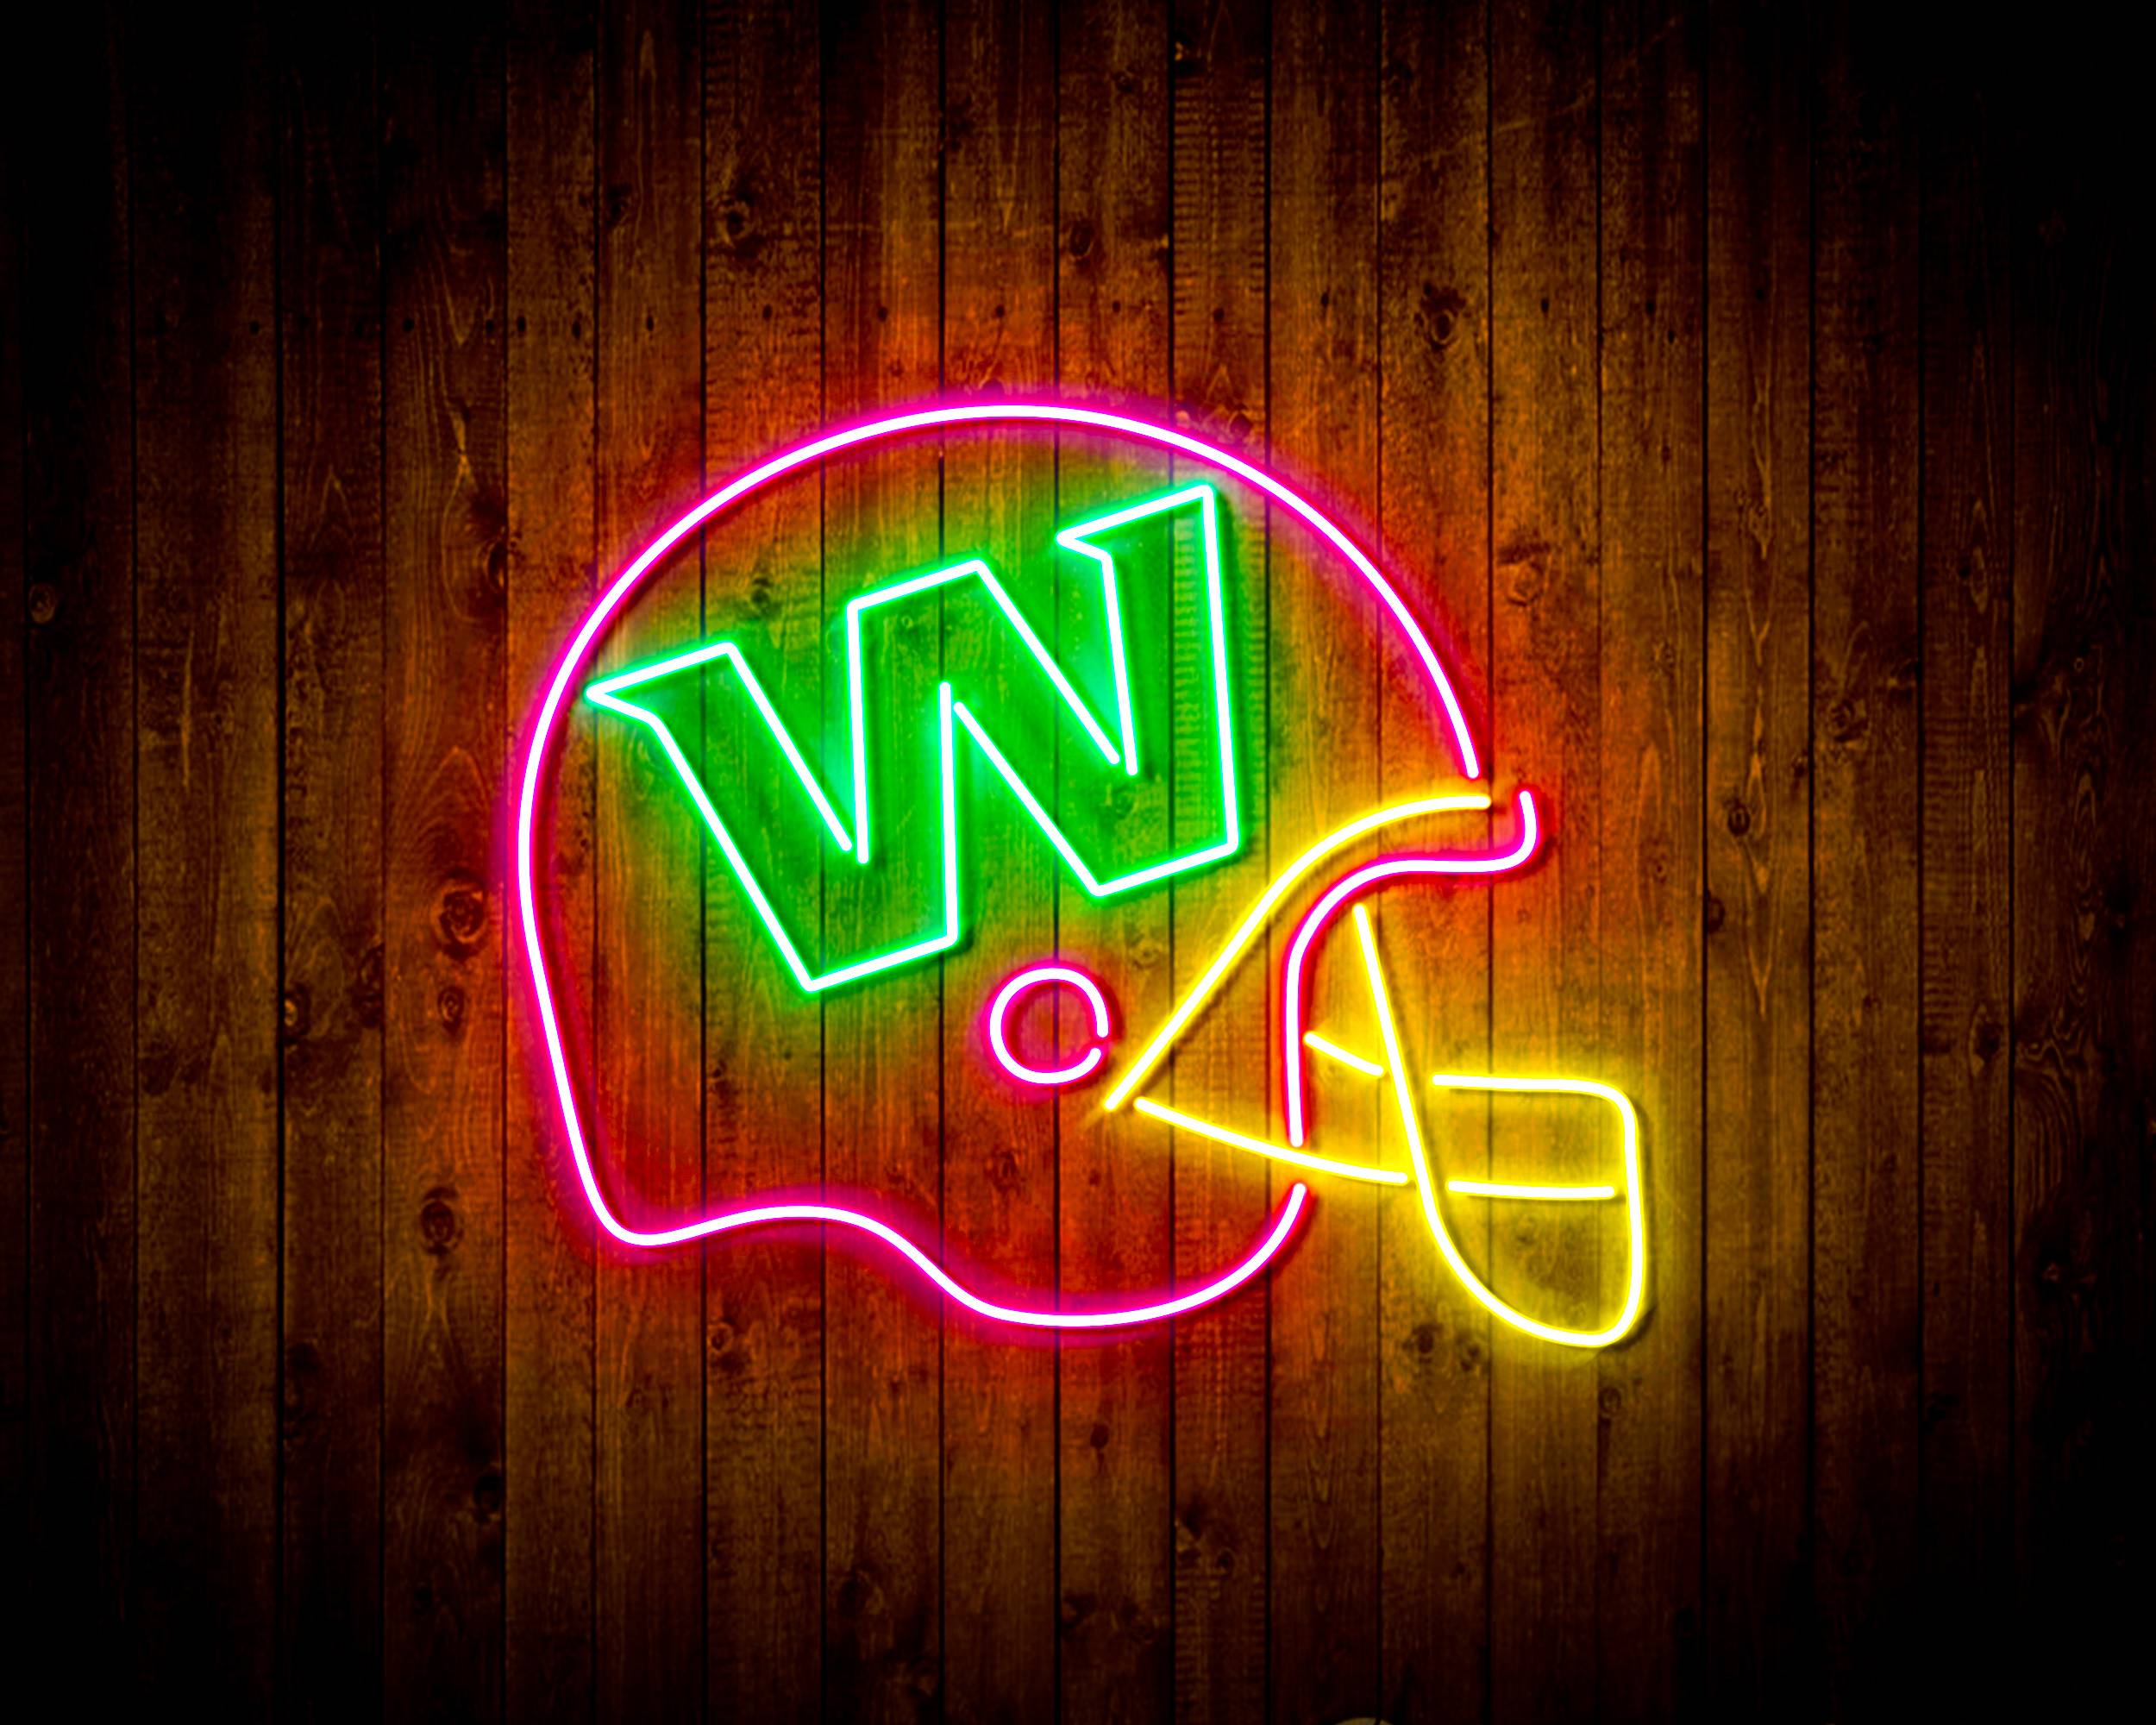 NFL Helmet Washington Football Team Bar Neon LED Sign